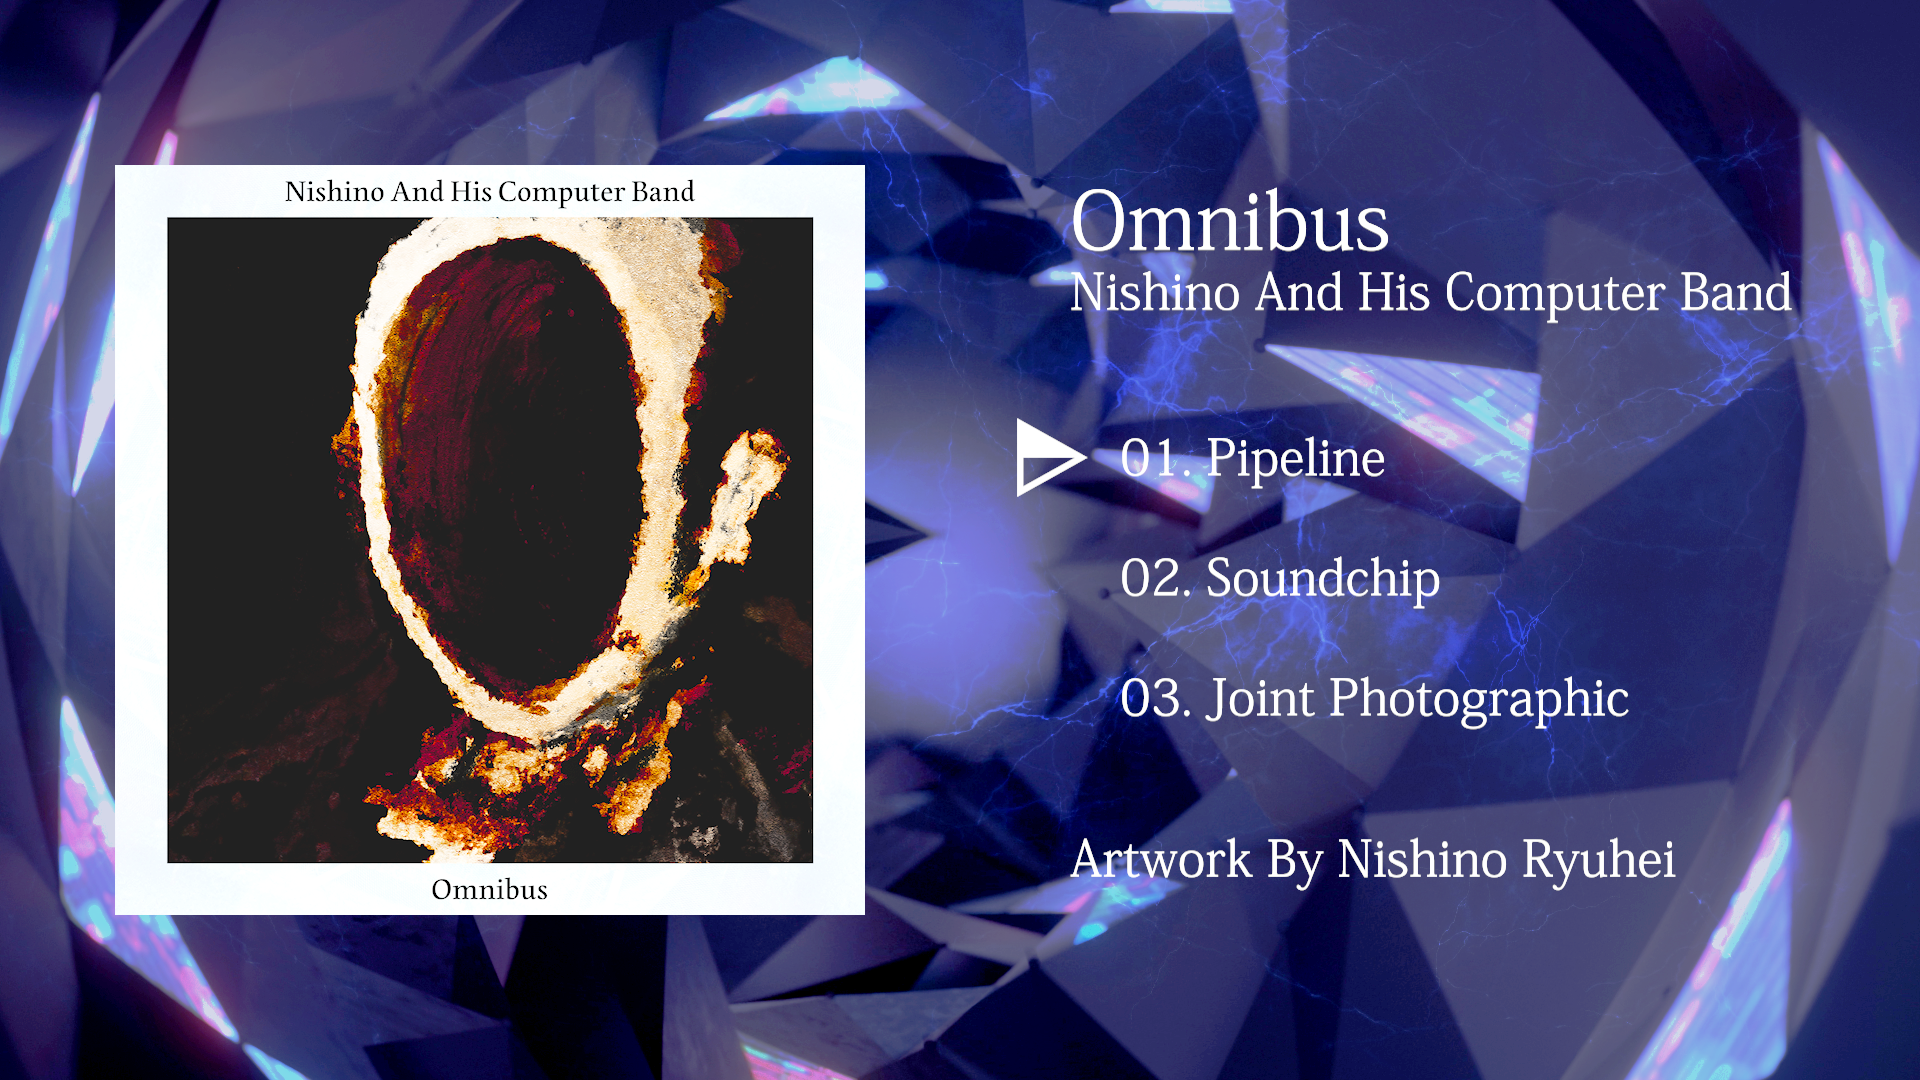 Nishino And His Computer Bandの2ndアルバム「Omnibus」のサムネイル画像